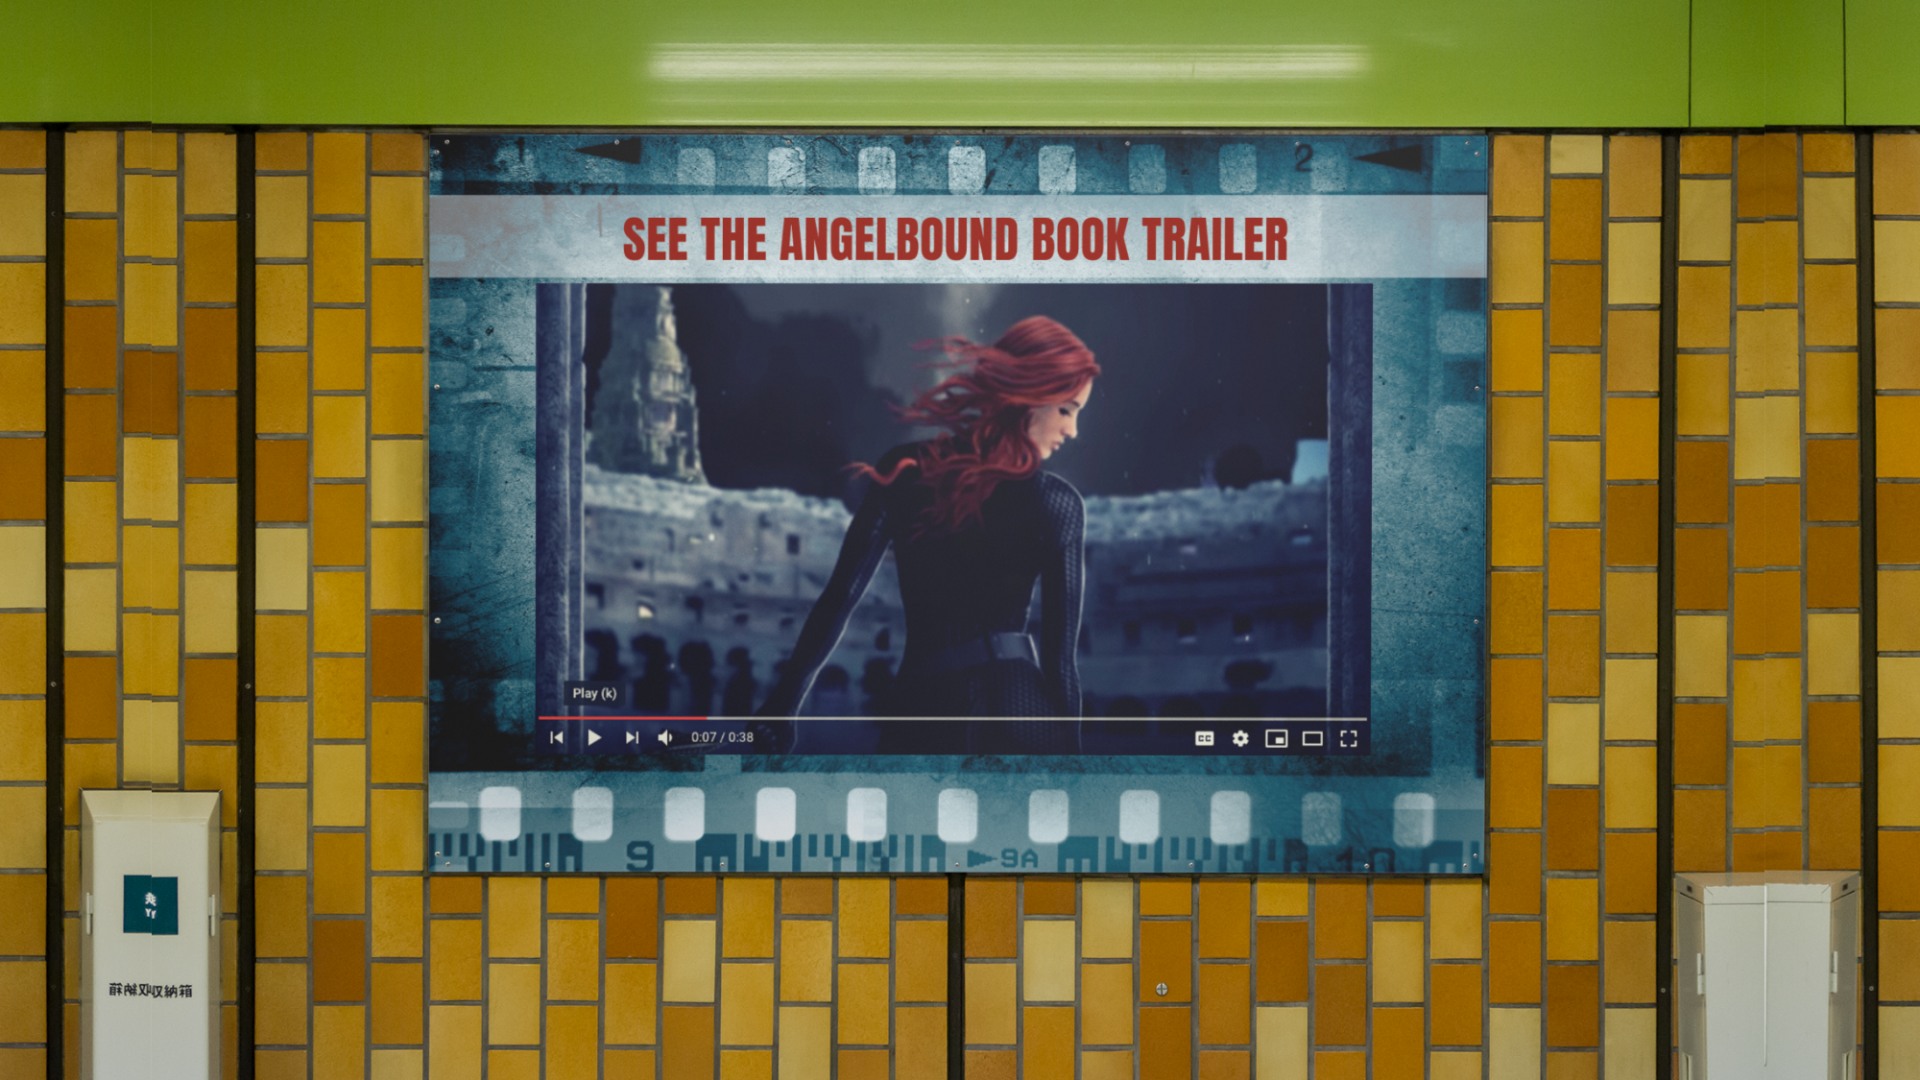 ANGELBOUND Book Trailer & More!